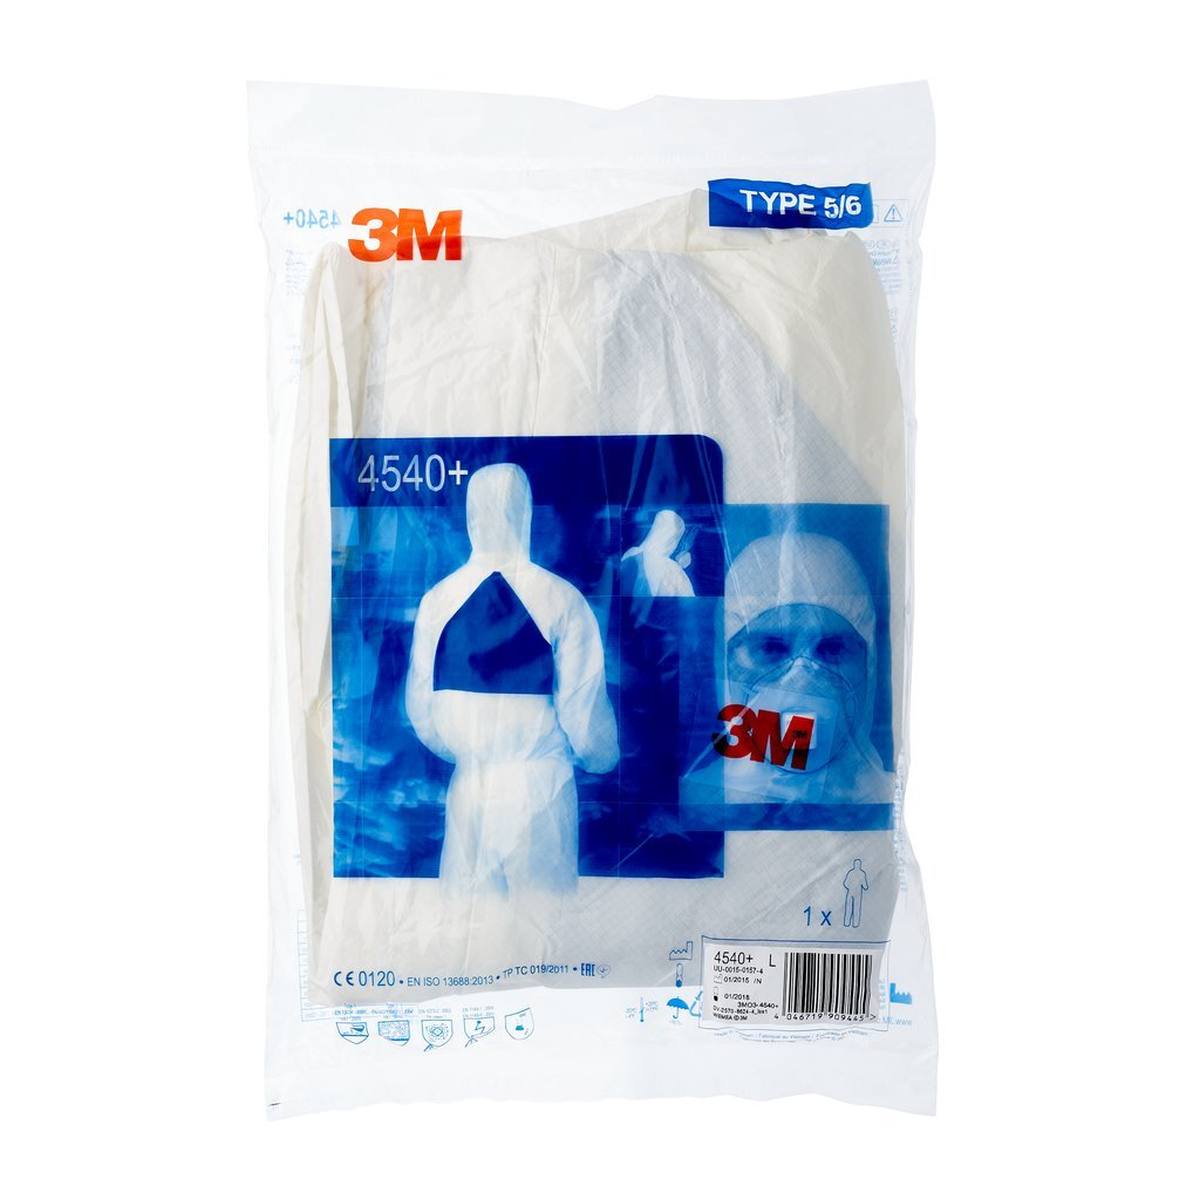 Tuta 3M 4540+, bianco+blu, tipo 5/6, taglia M, robusta, anti-pelucchi, cuciture rinforzate, materiale SMMMS, traspirante, zip staccabile, polsini in maglia